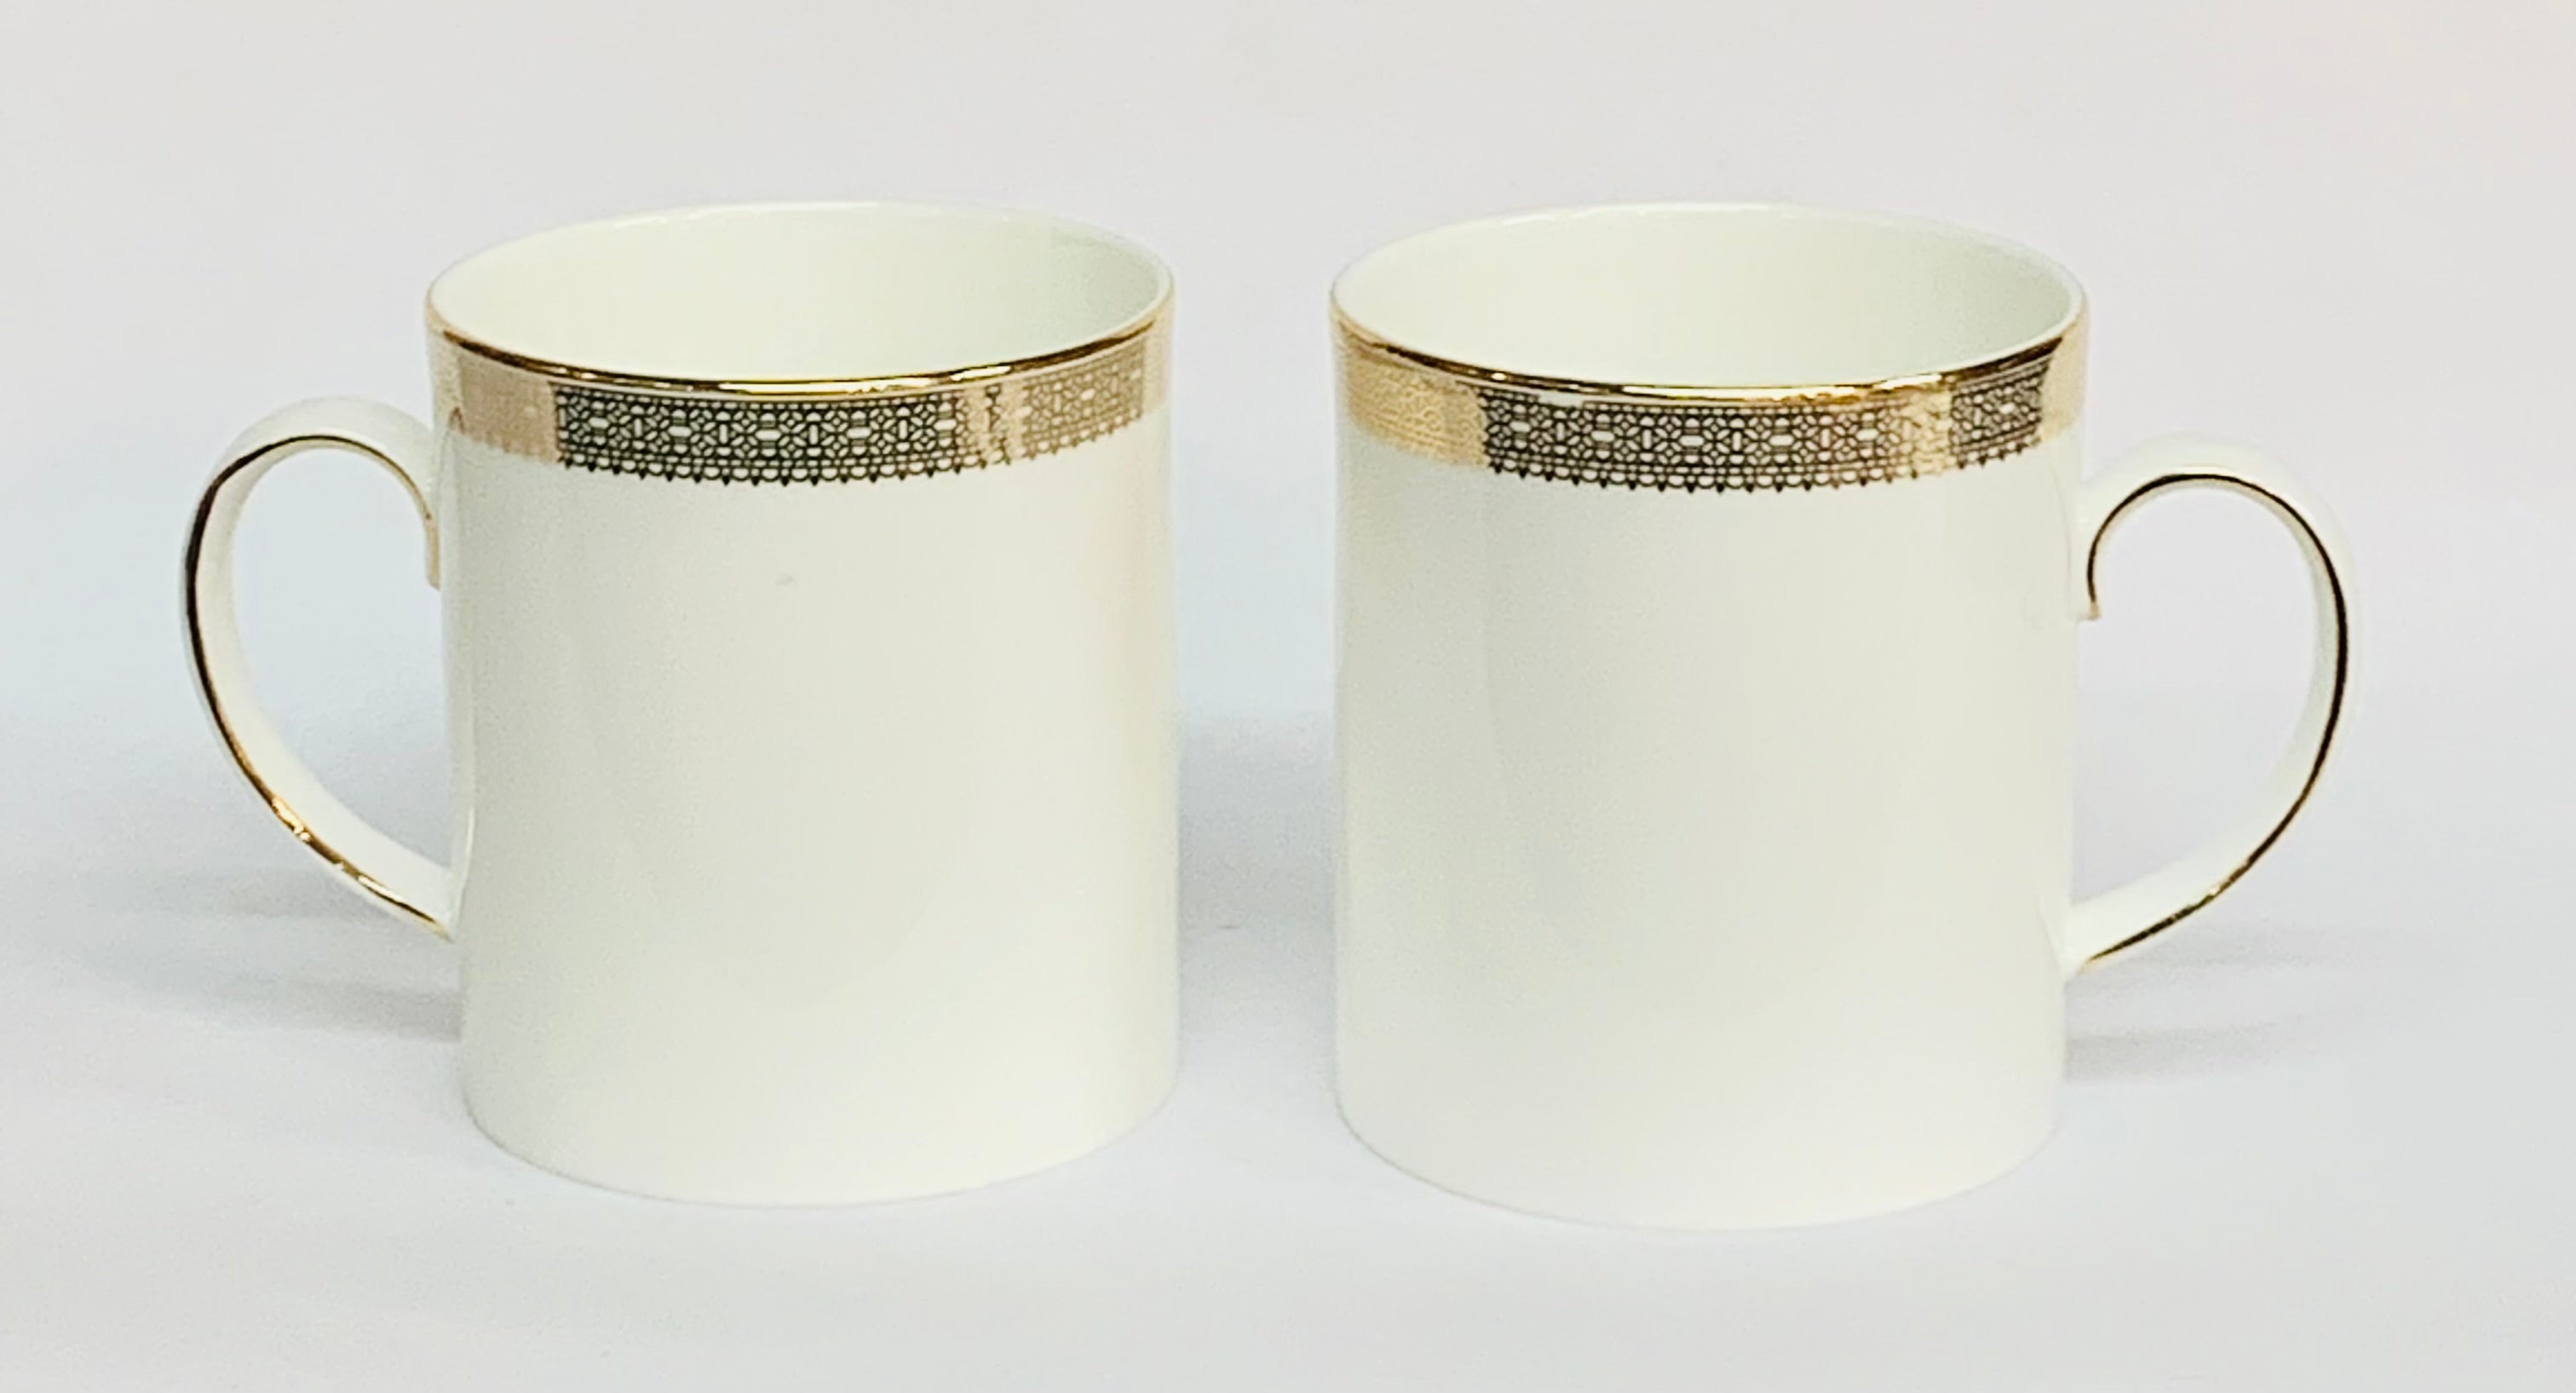 Wedgwood Lace Gold White Bone China Mug, 15-oz by Vera Wang - Royal Gift